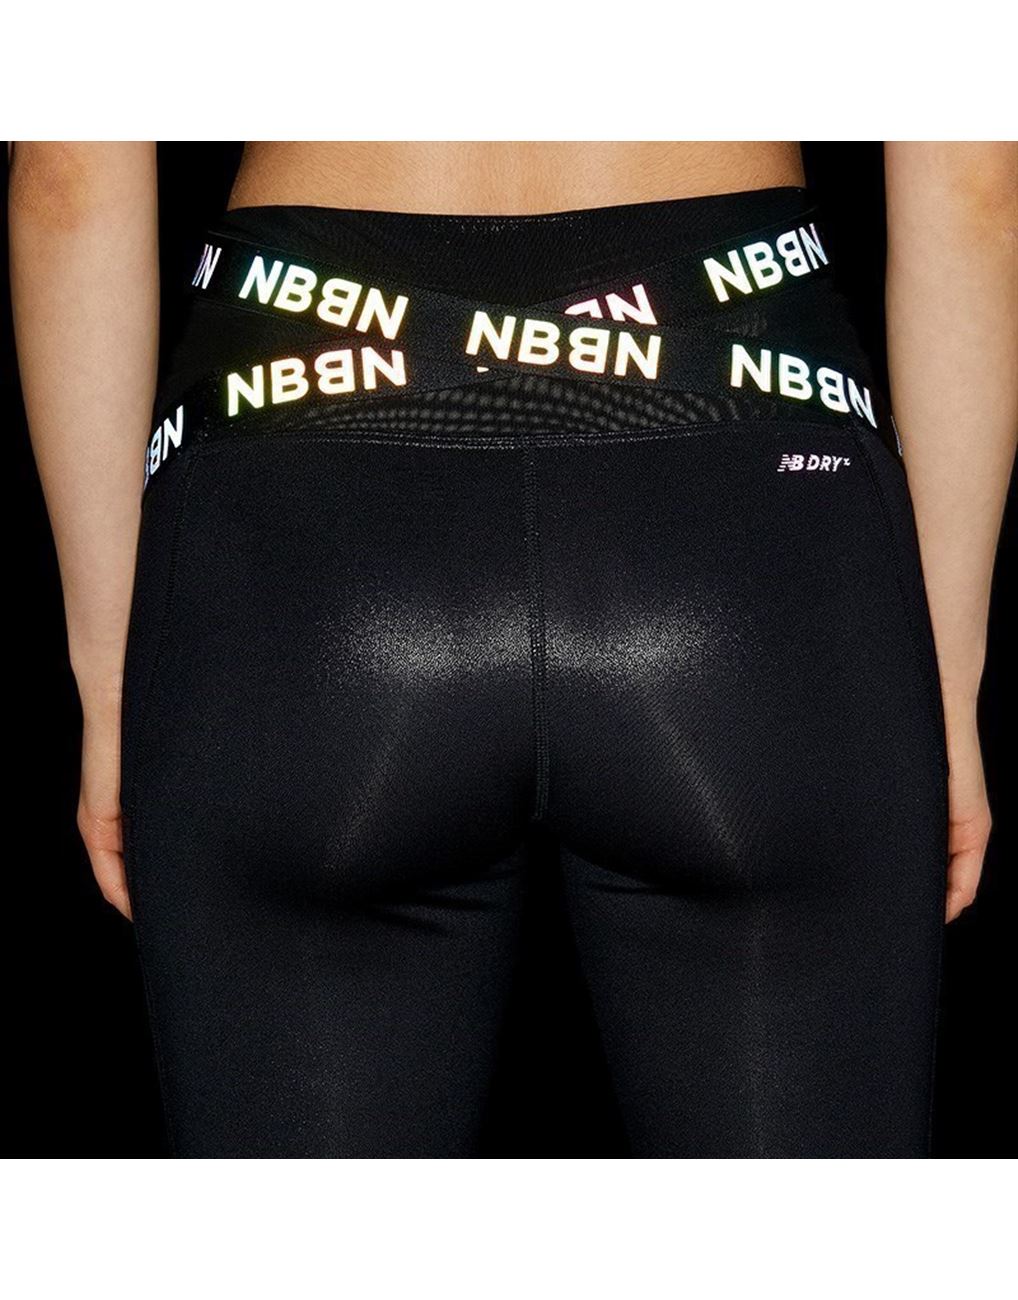 New Balance Women Legging Black White Spacedye XS Small Medium NB